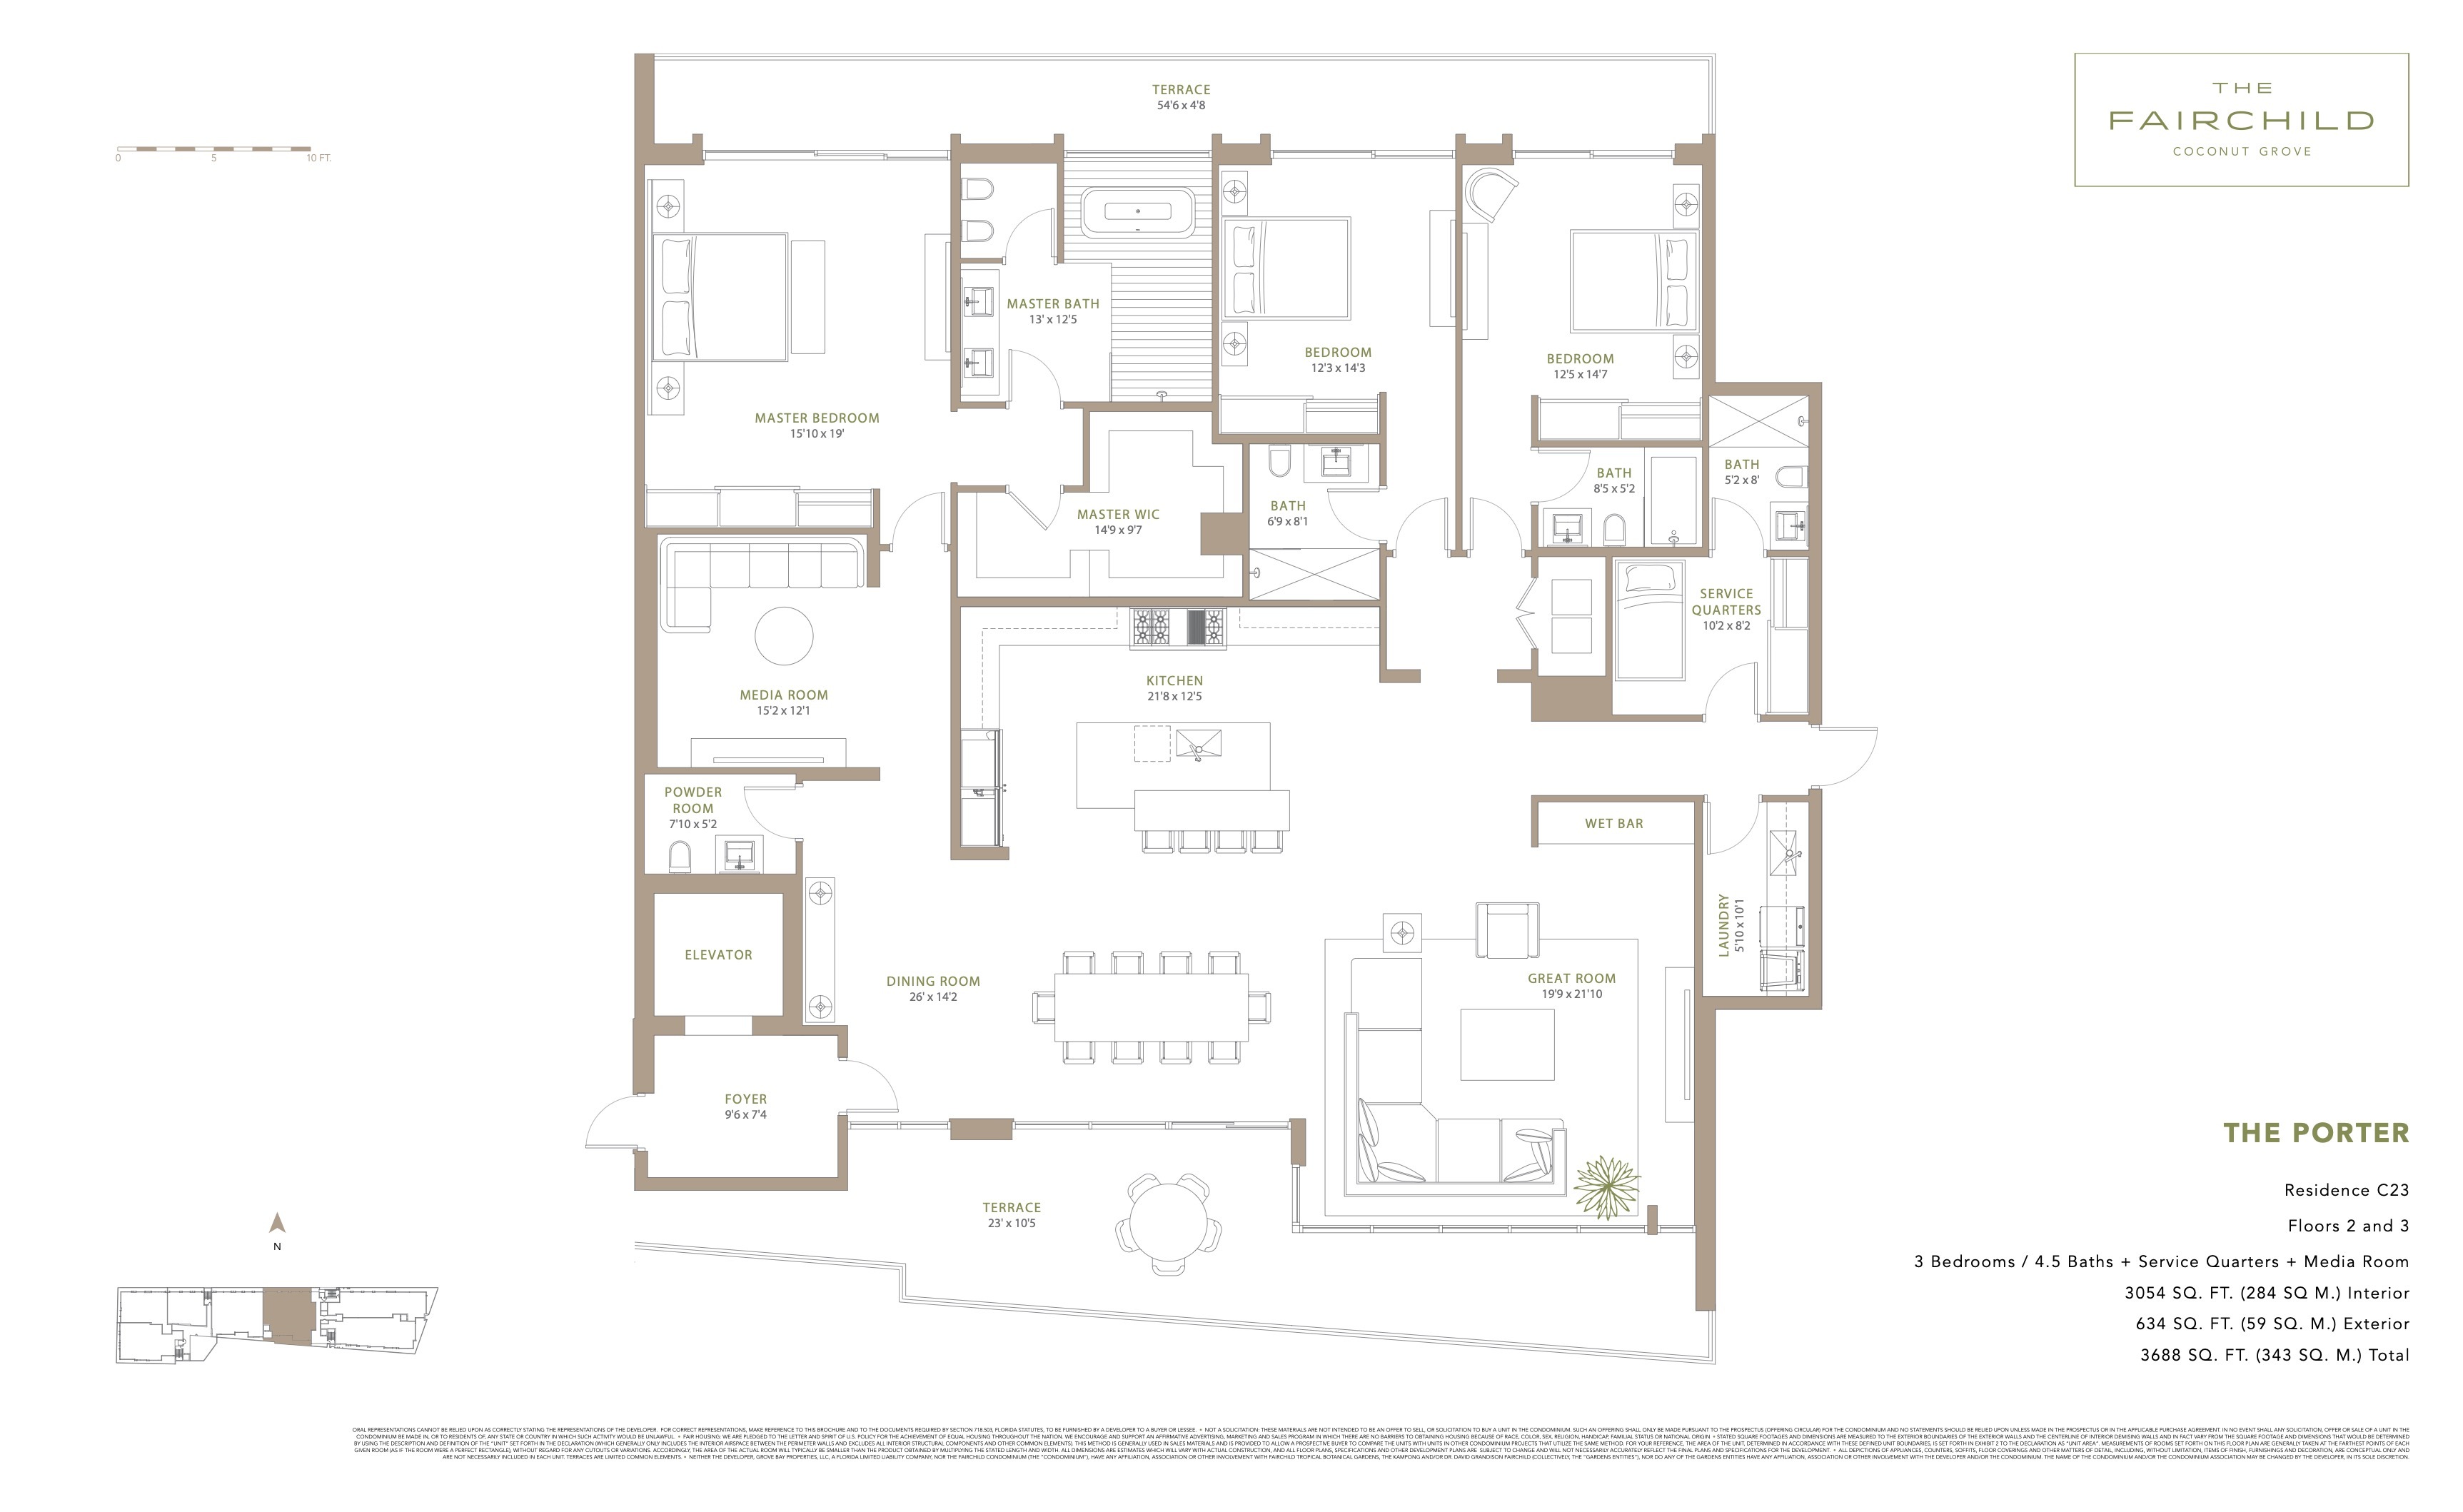 Floor Plan for The Fairchild Coconut Grove Floorplans, The Porter